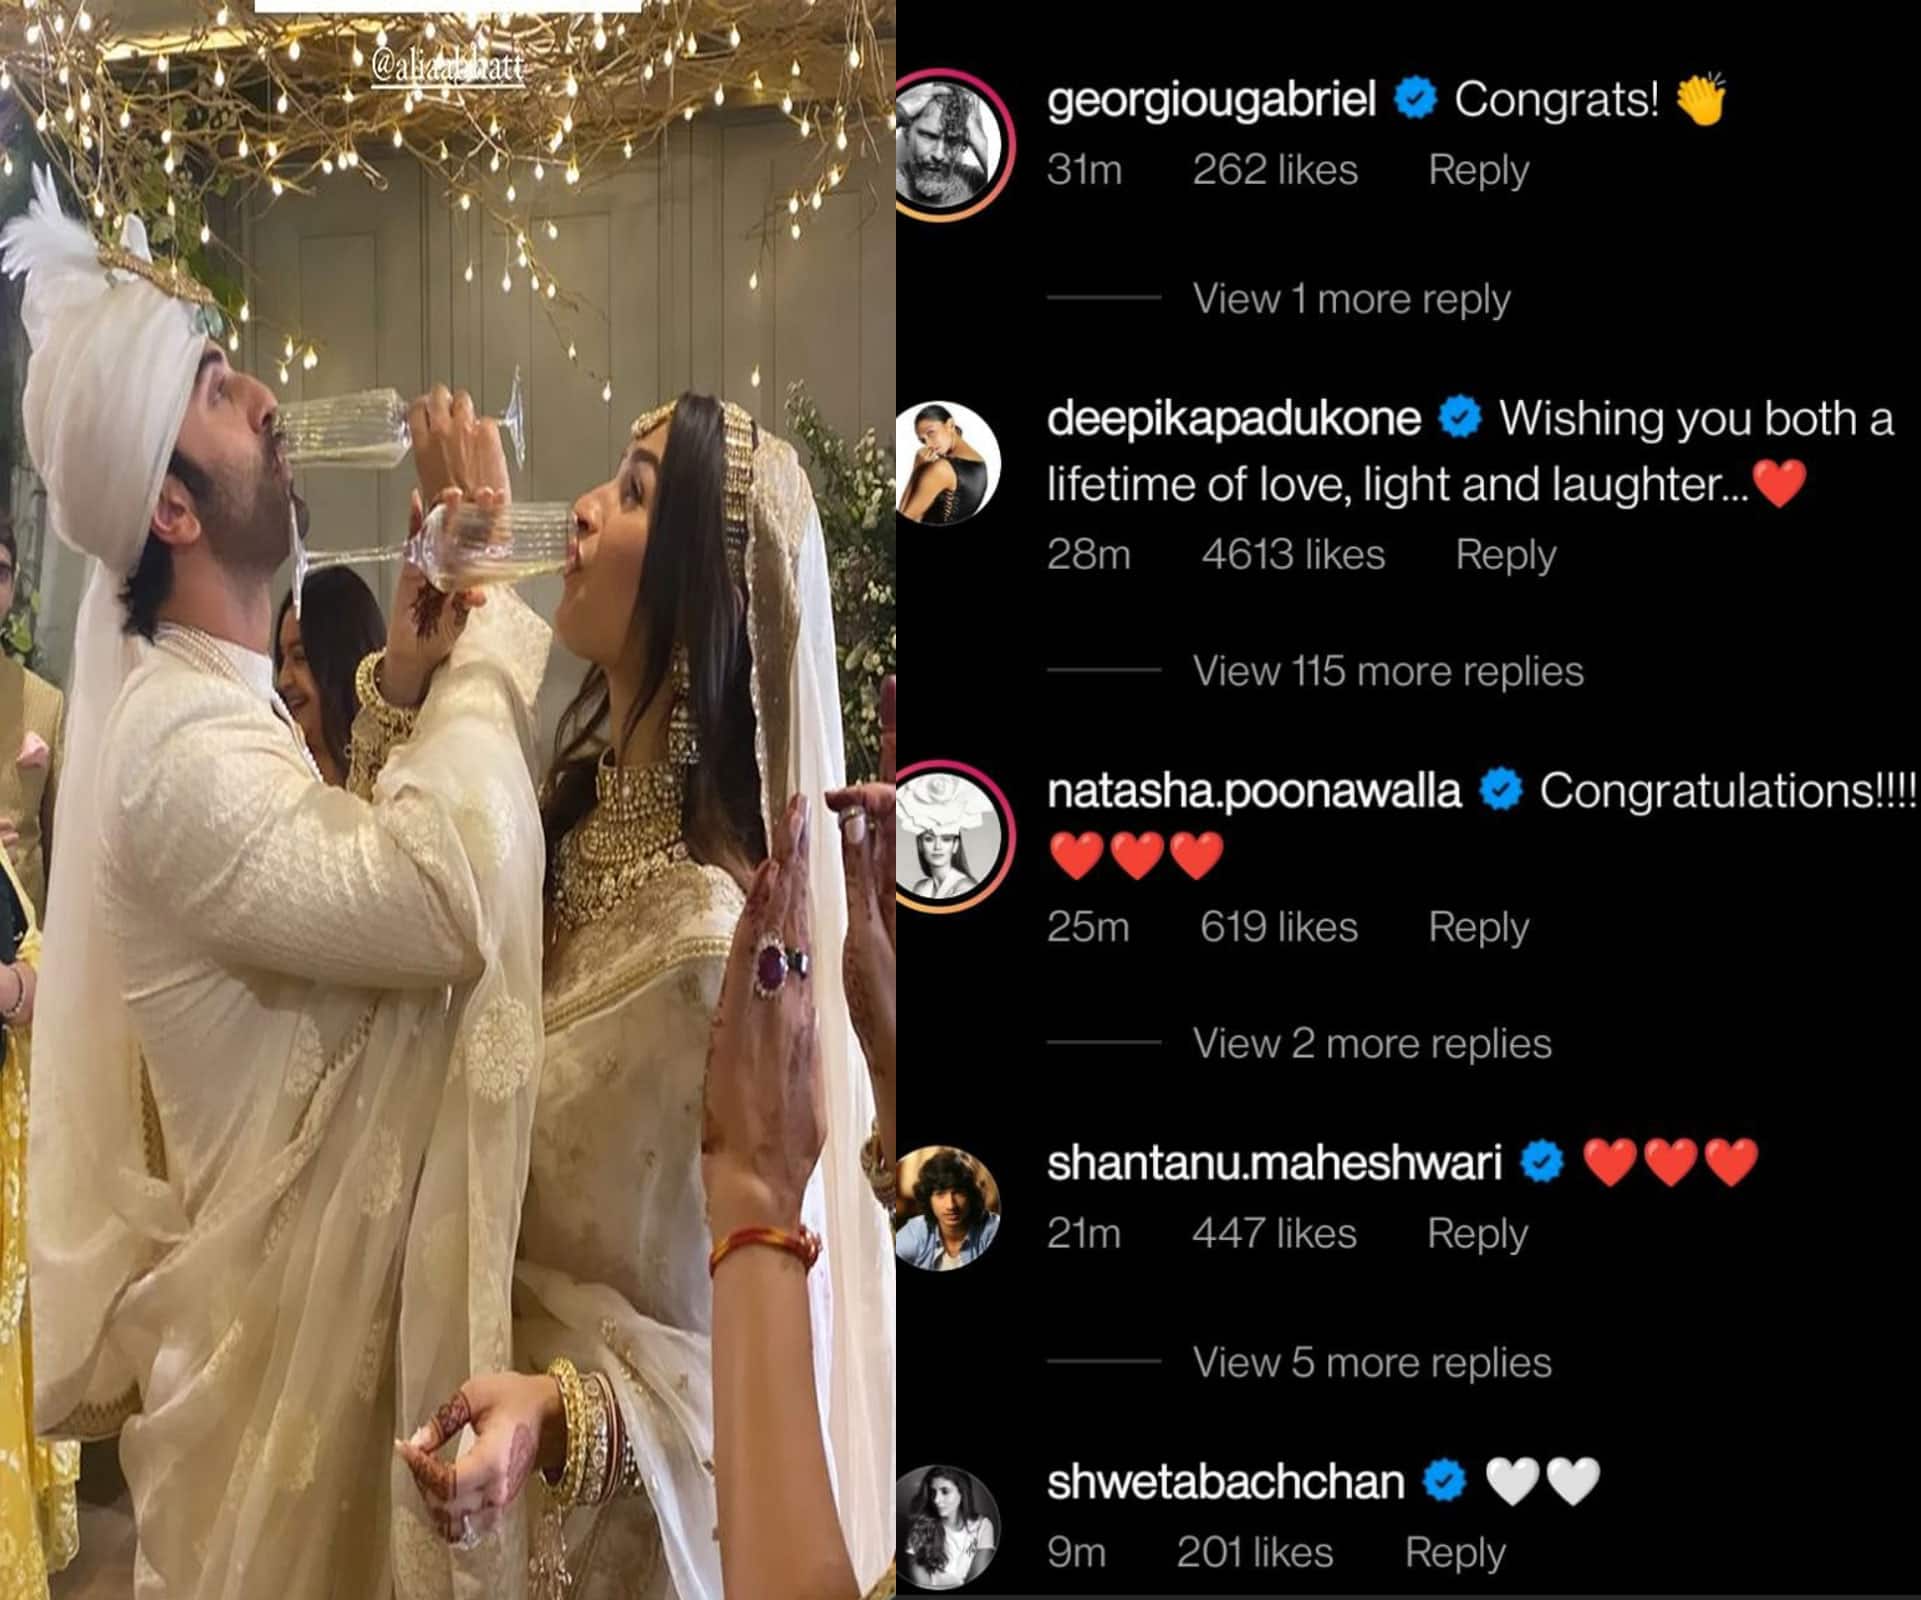 Deepika Padukone wished Ralia on their wedding